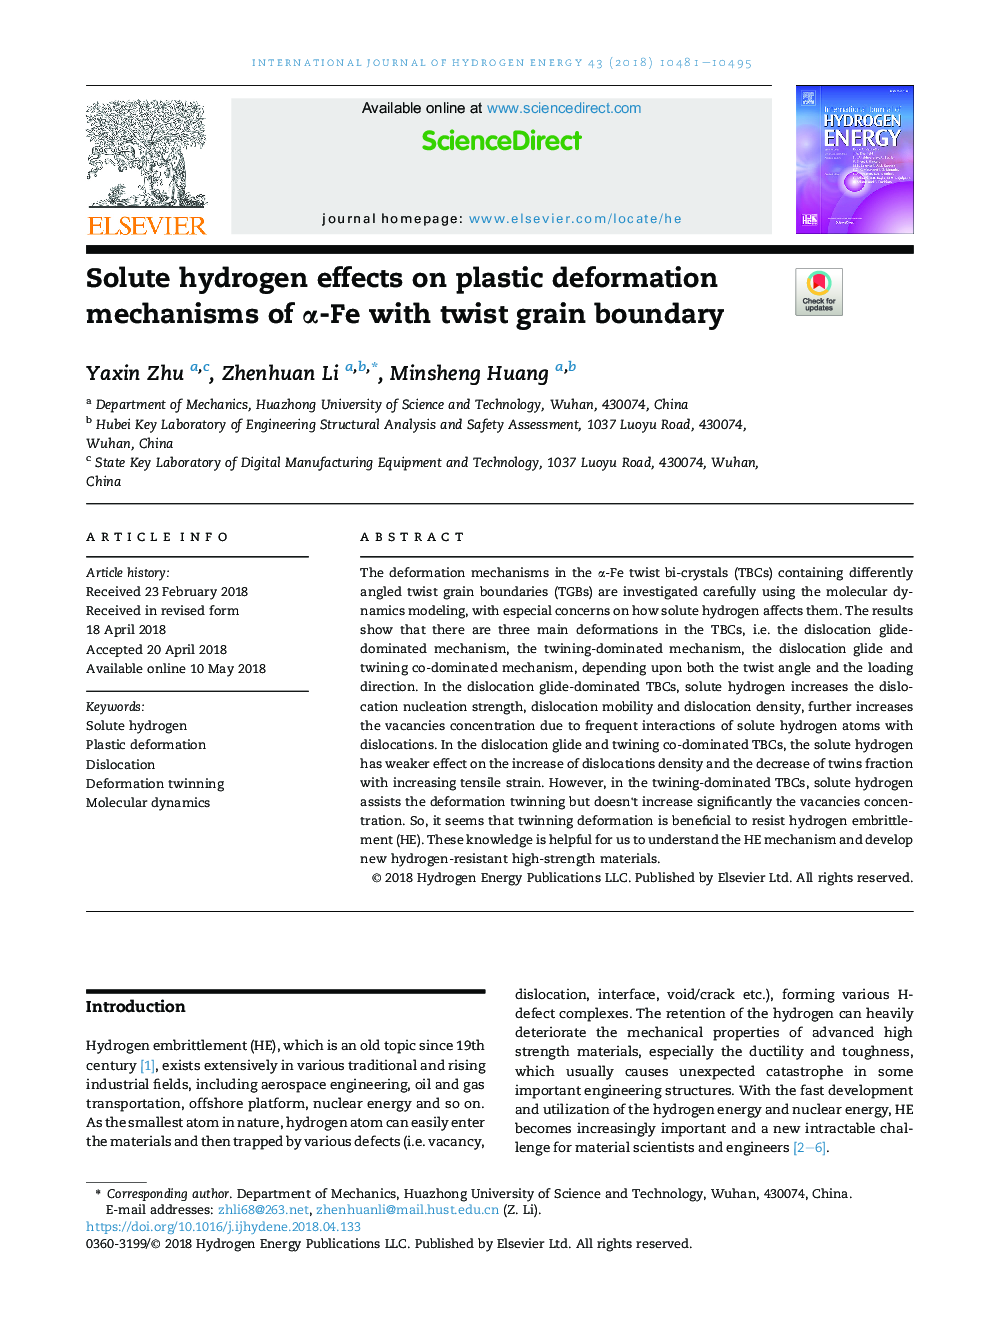 Solute hydrogen effects on plastic deformation mechanisms of Î±-Fe with twist grain boundary